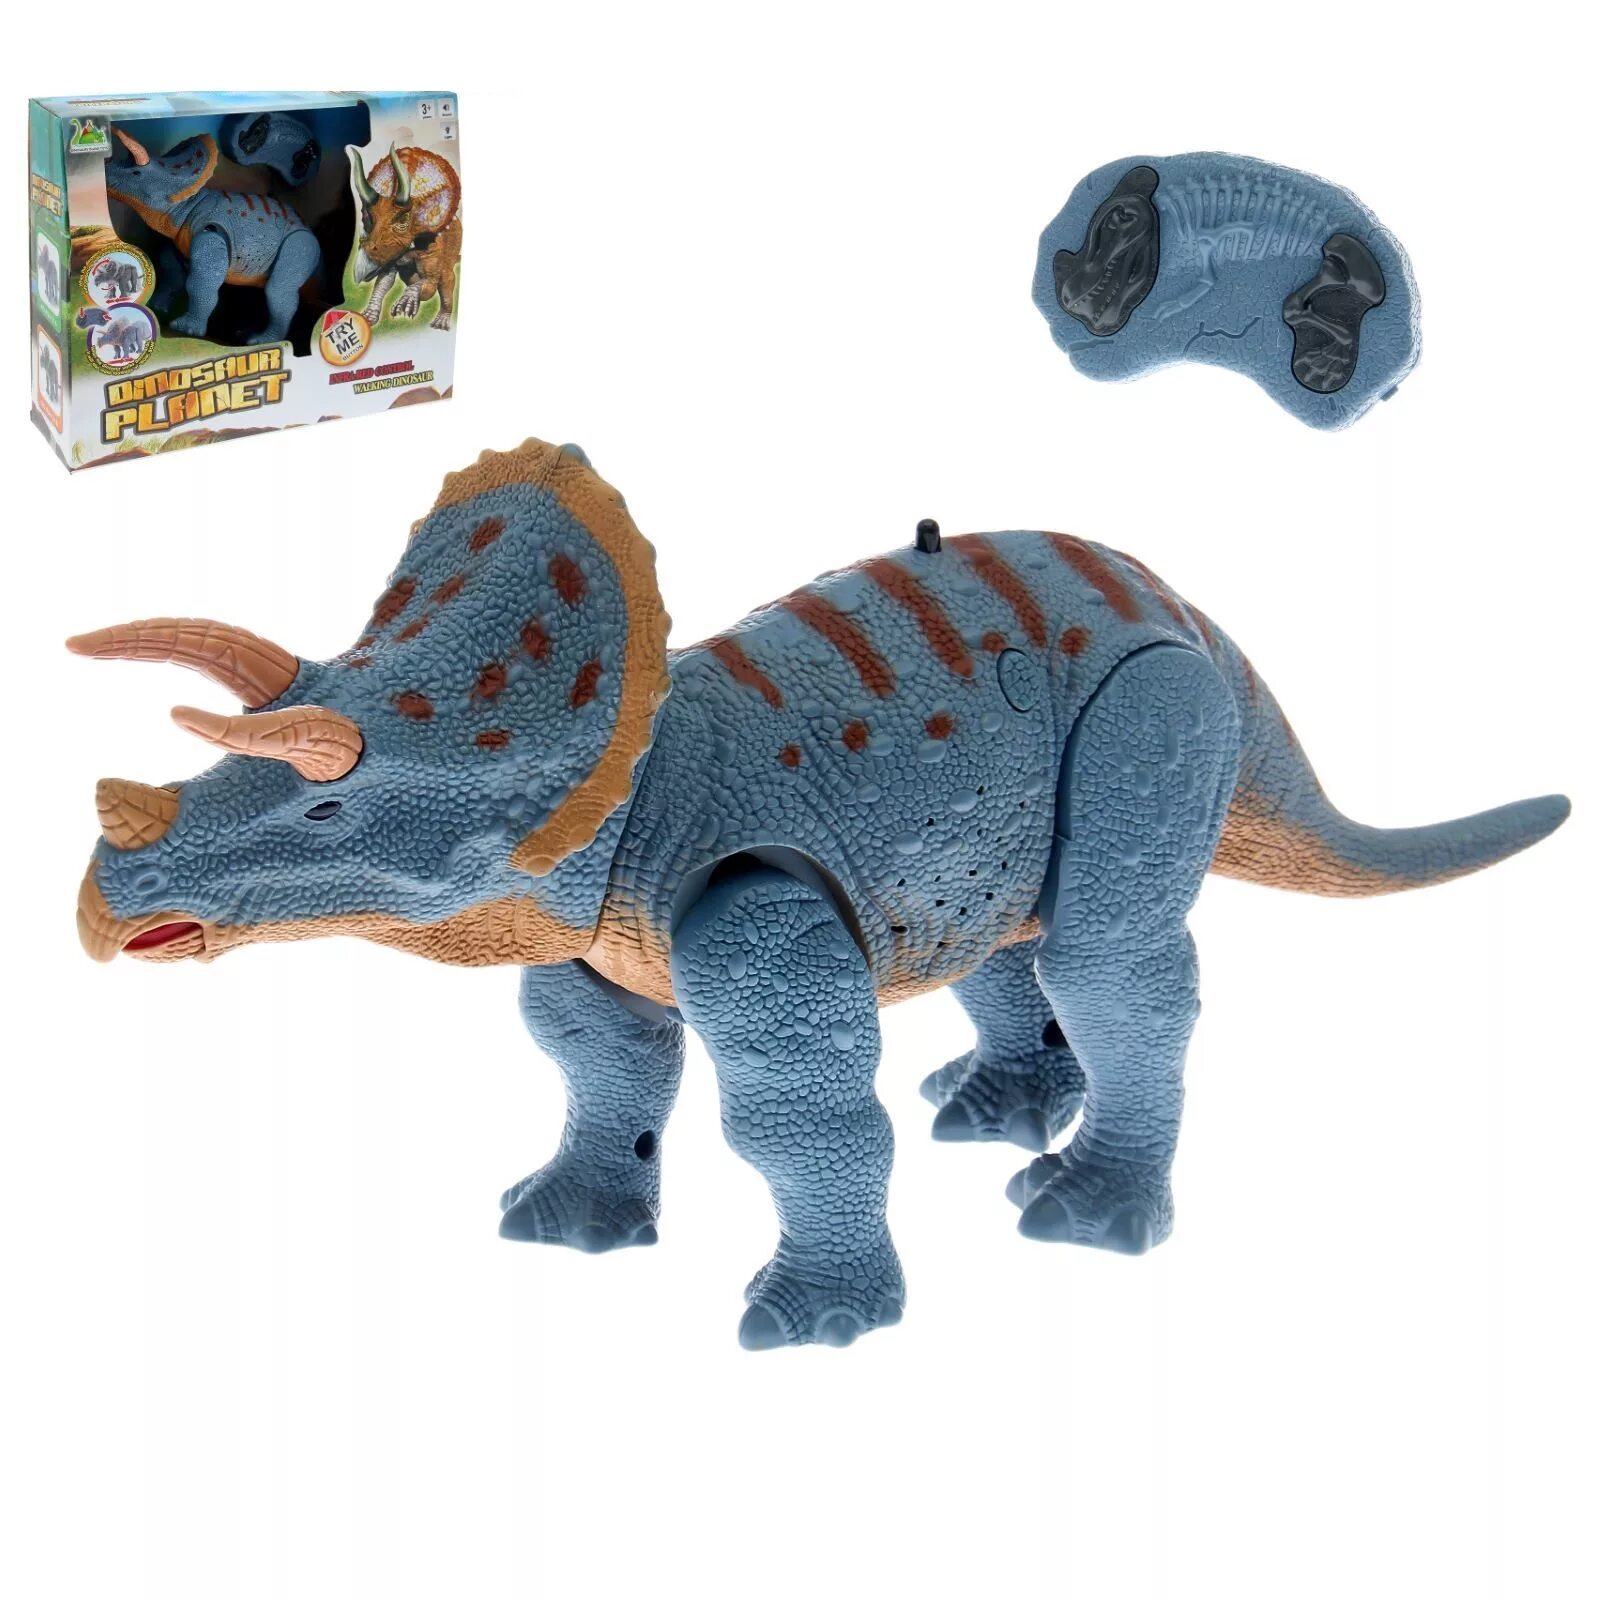 Трицератопс игрушка свет звук. Динозавр Трицератопс игрушка на пульте управления. Трицератопс динозавр фигурка. Rs6137a динозавр Трицератопс.